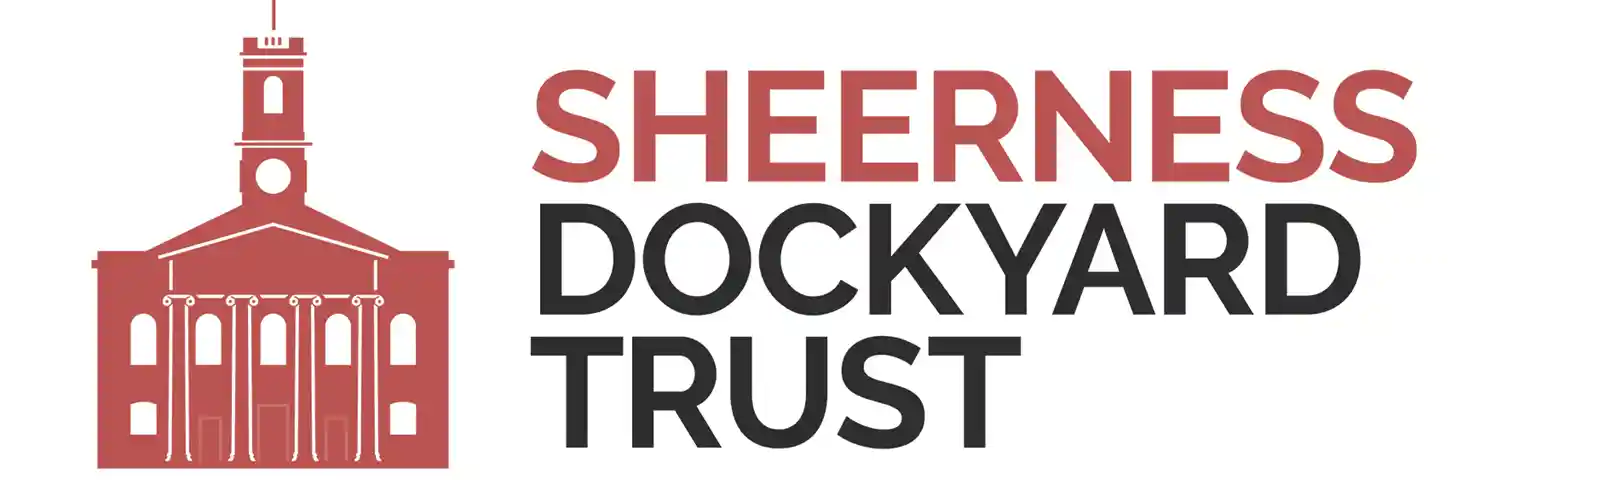 Sheerness Dockyard Trust Banner.png